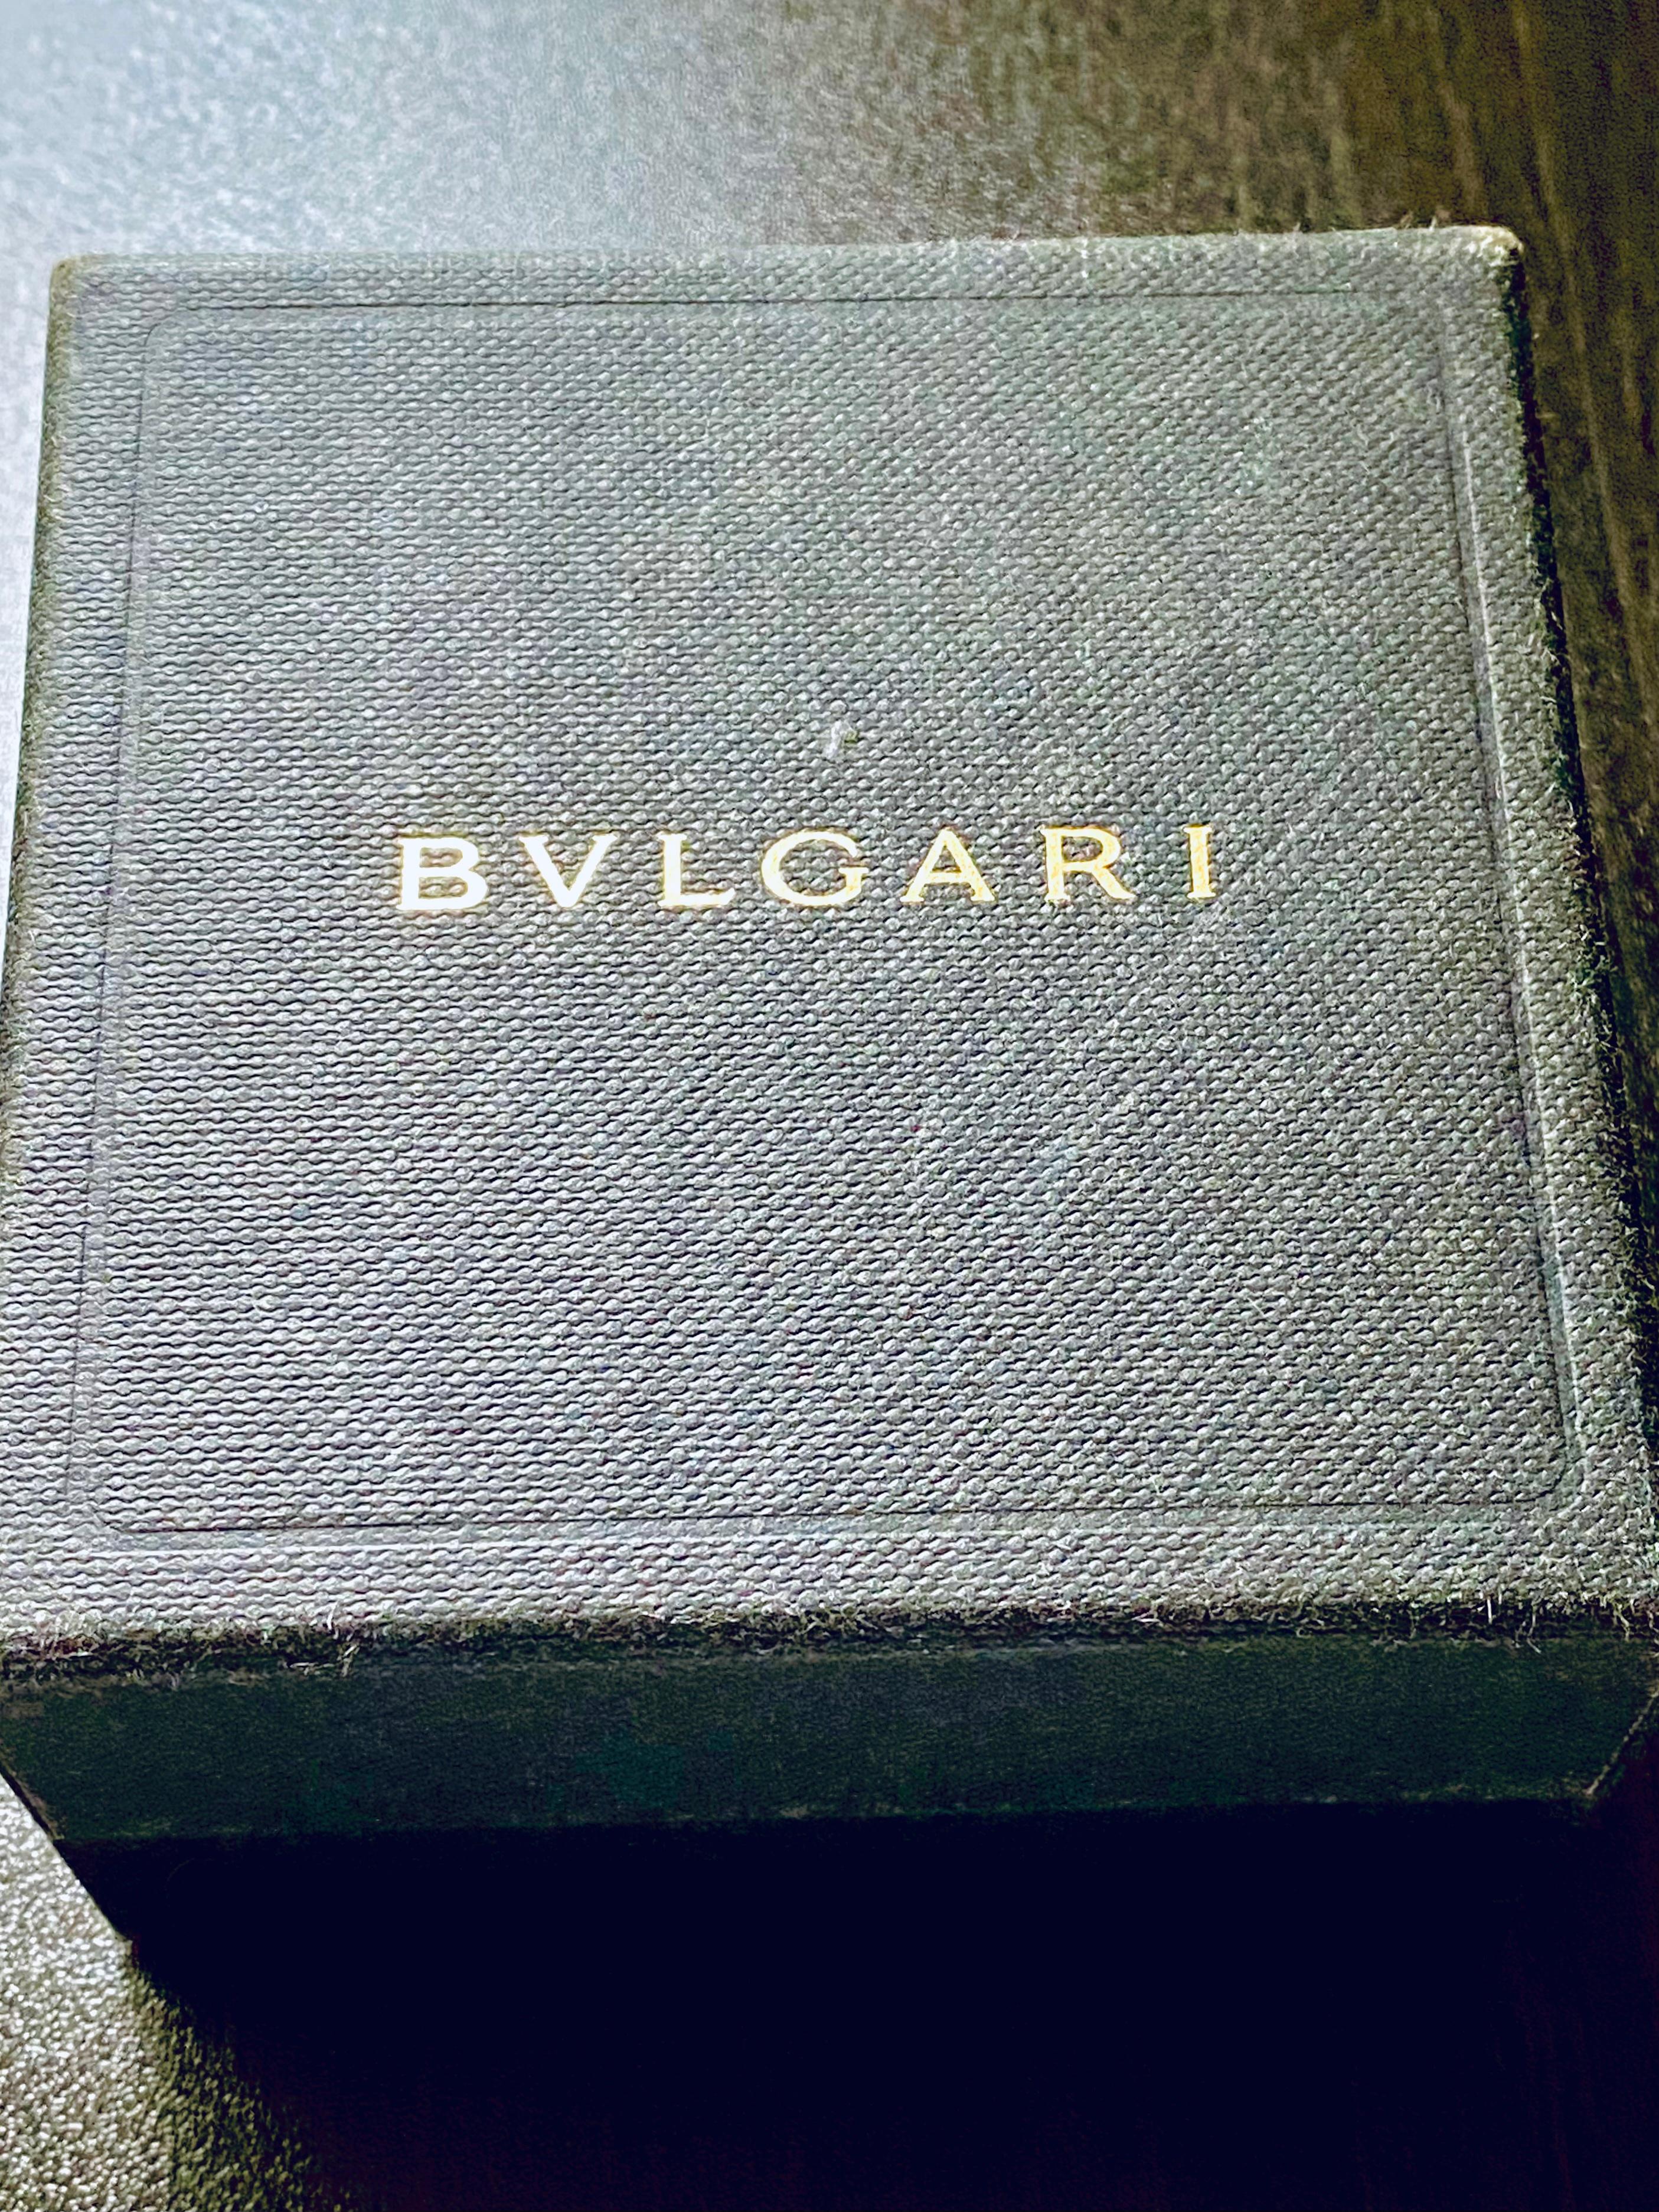 Bvlgari Passo Doppio Collection 18 Karat Gold Band Ring Finger Size 9 For Sale 4